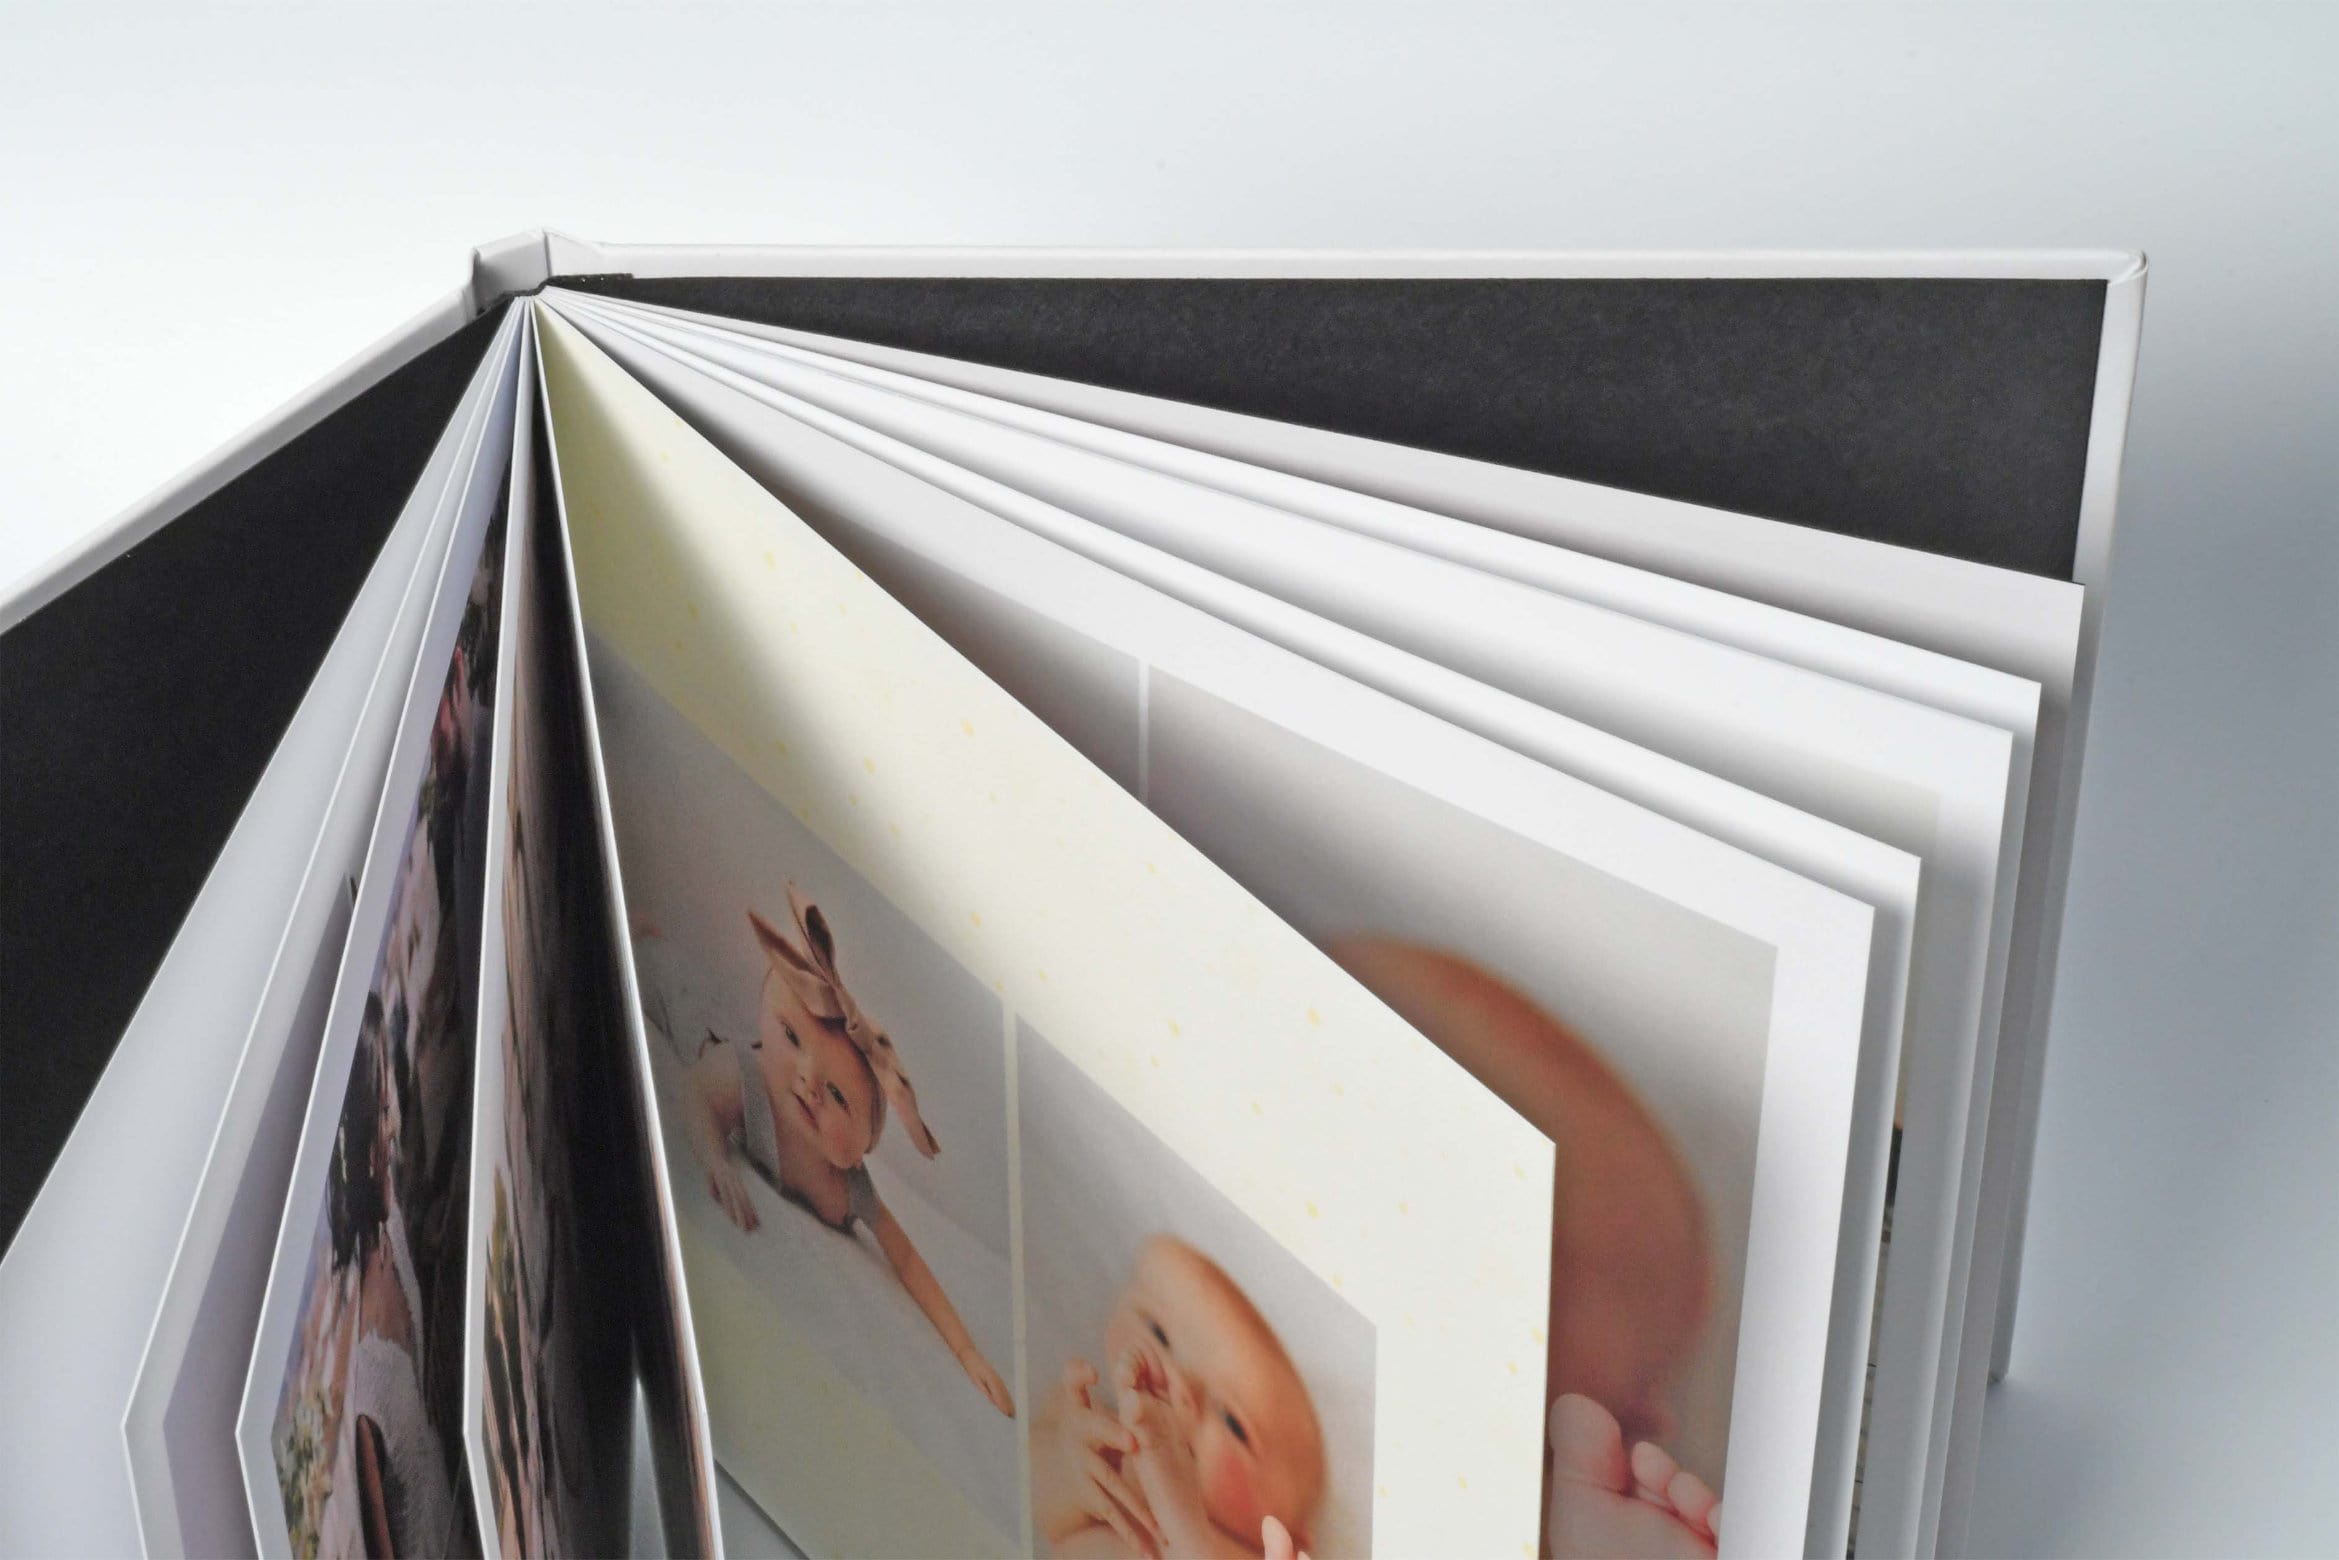 Thick Premium Quality Paper Used to Make Layflat Photo Books